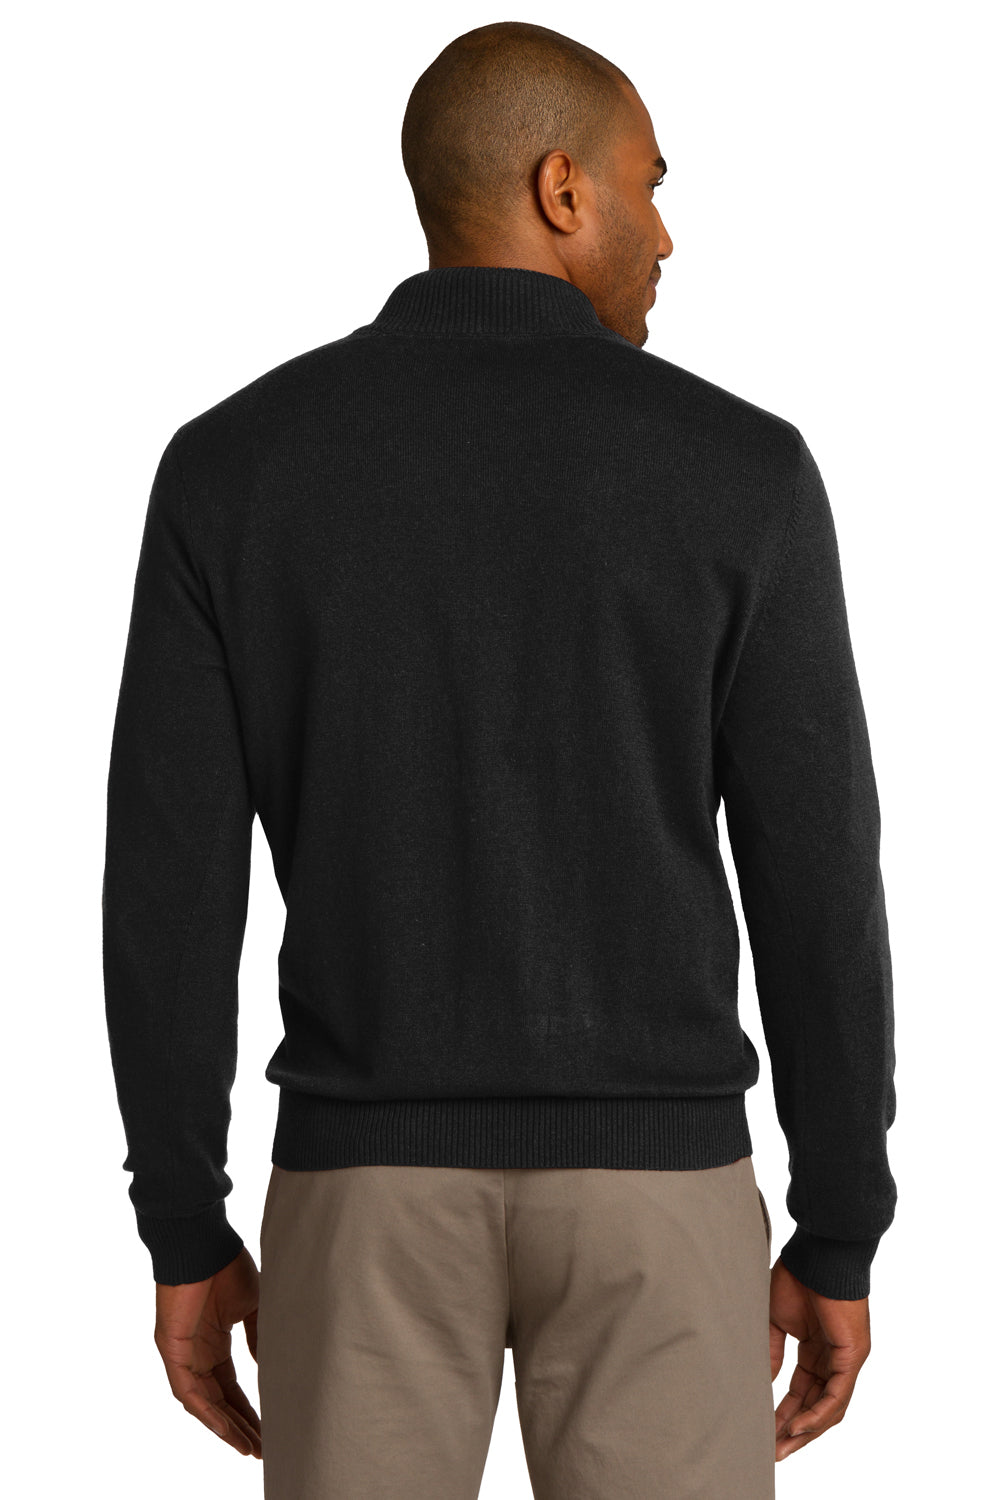 Port Authority SW290 Mens Long Sleeve 1/4 Zip Sweater Black Back